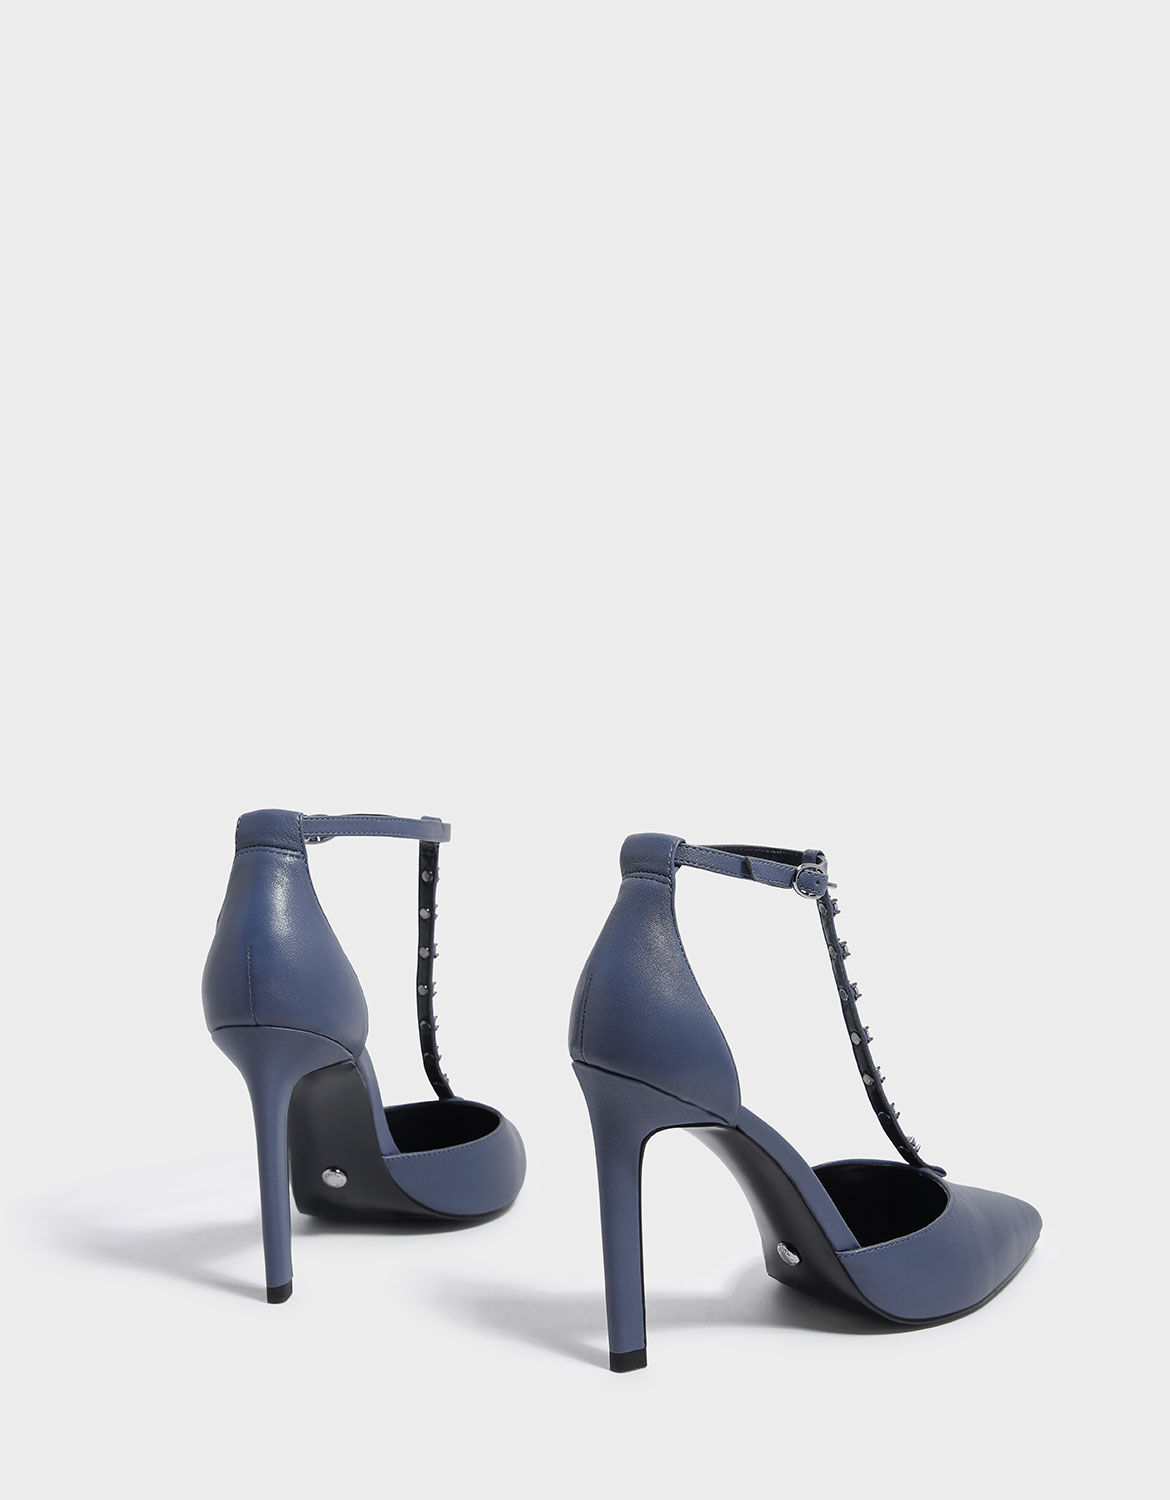 slate blue heels